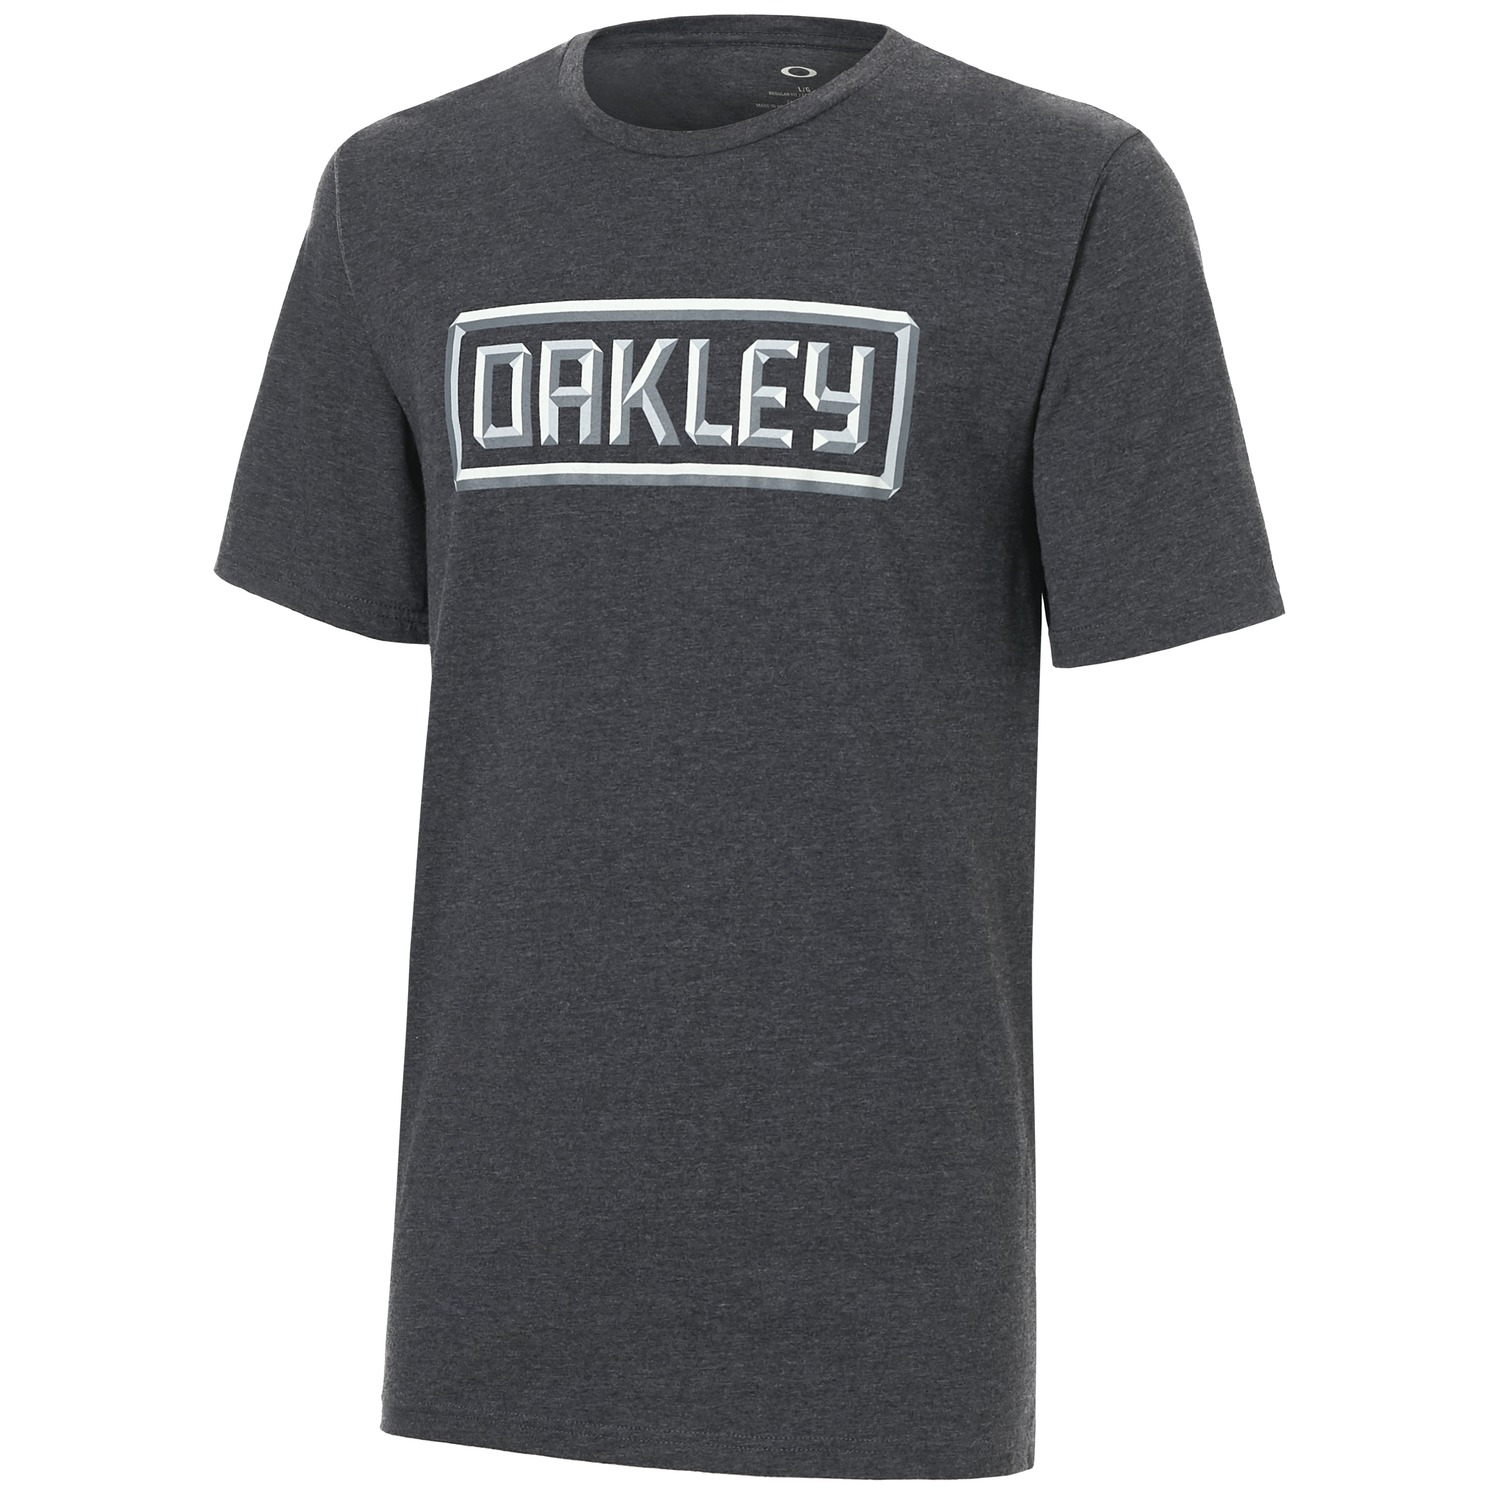 Oakley triko 50 3D Oakley dark brush dark heather Velikost: L + doručení do 24 hod.